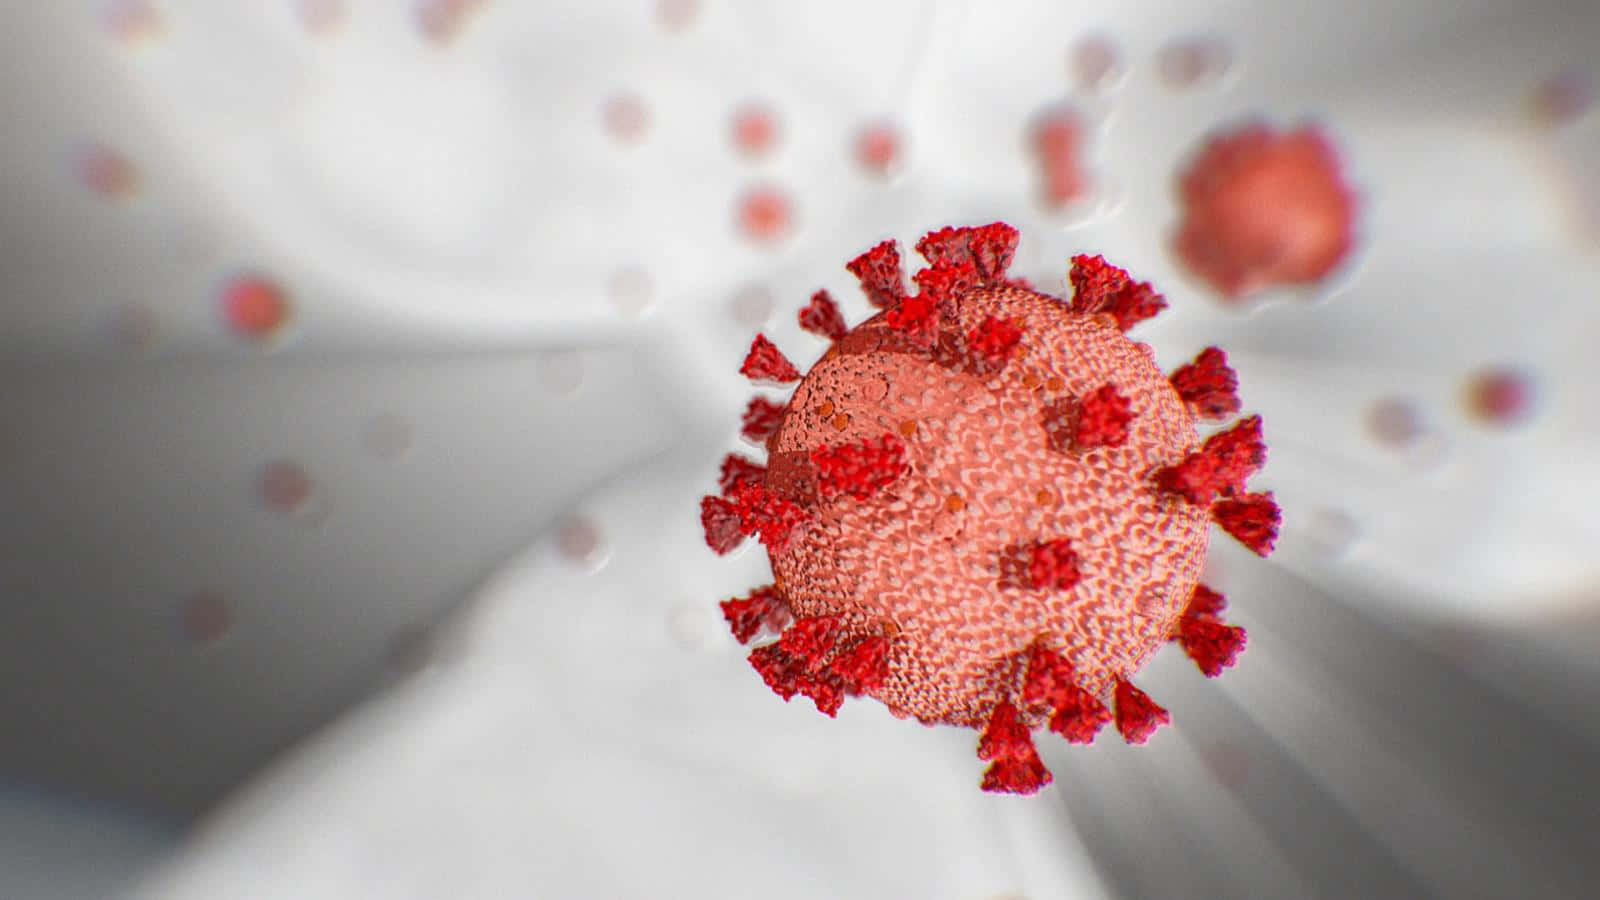 Coronavirus close-up illustration on a dark background